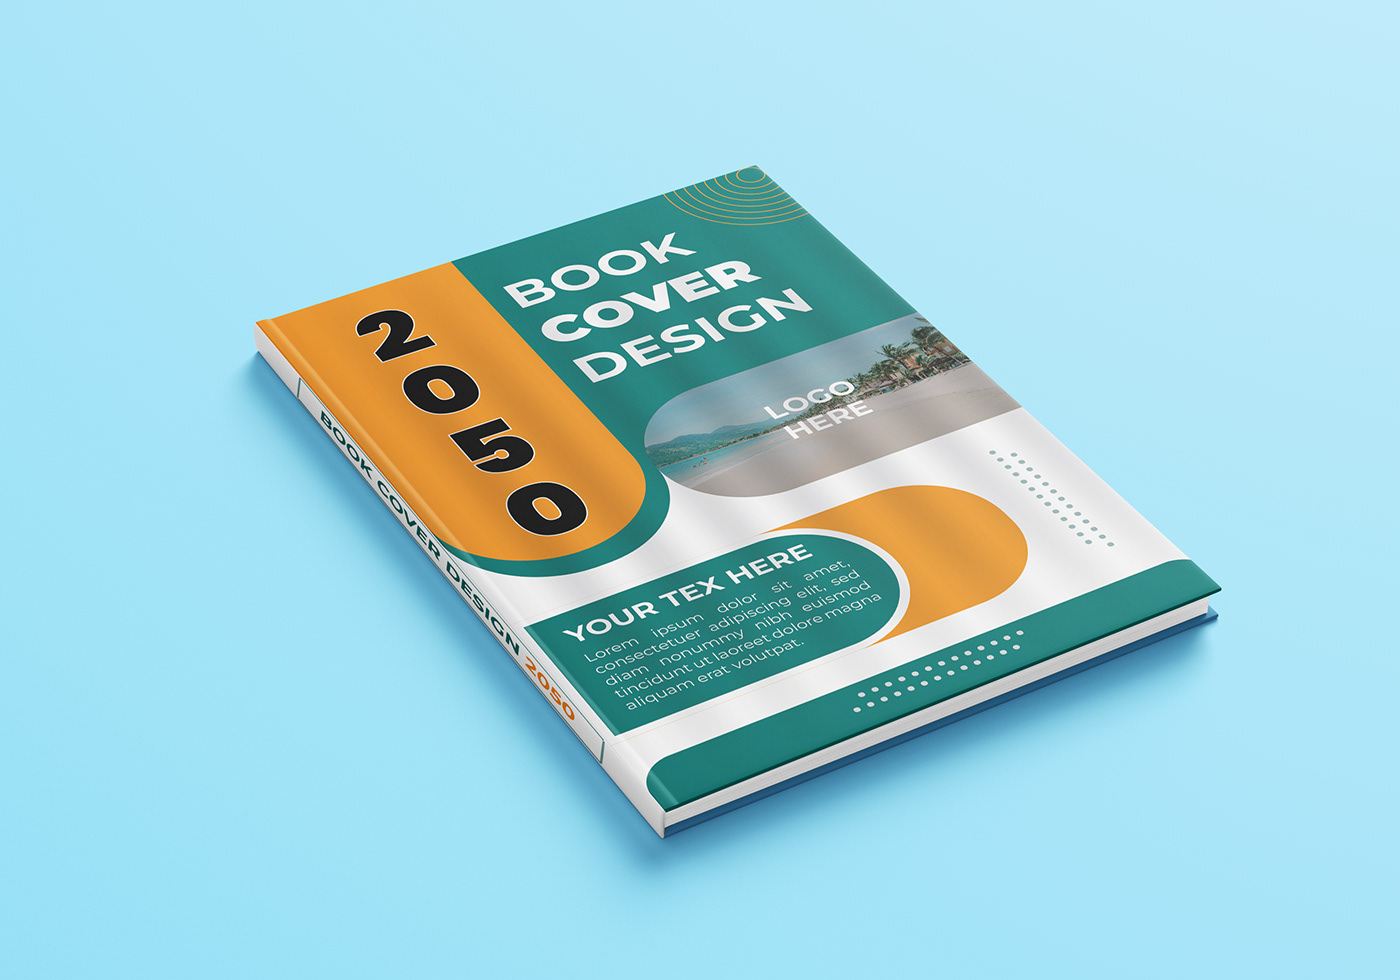 #bookdesign #coverart #graphicDesign #typography #bookjacket #ebookcover #bookcover #bookcoverdesign #bookcoverlove #BookishDesign